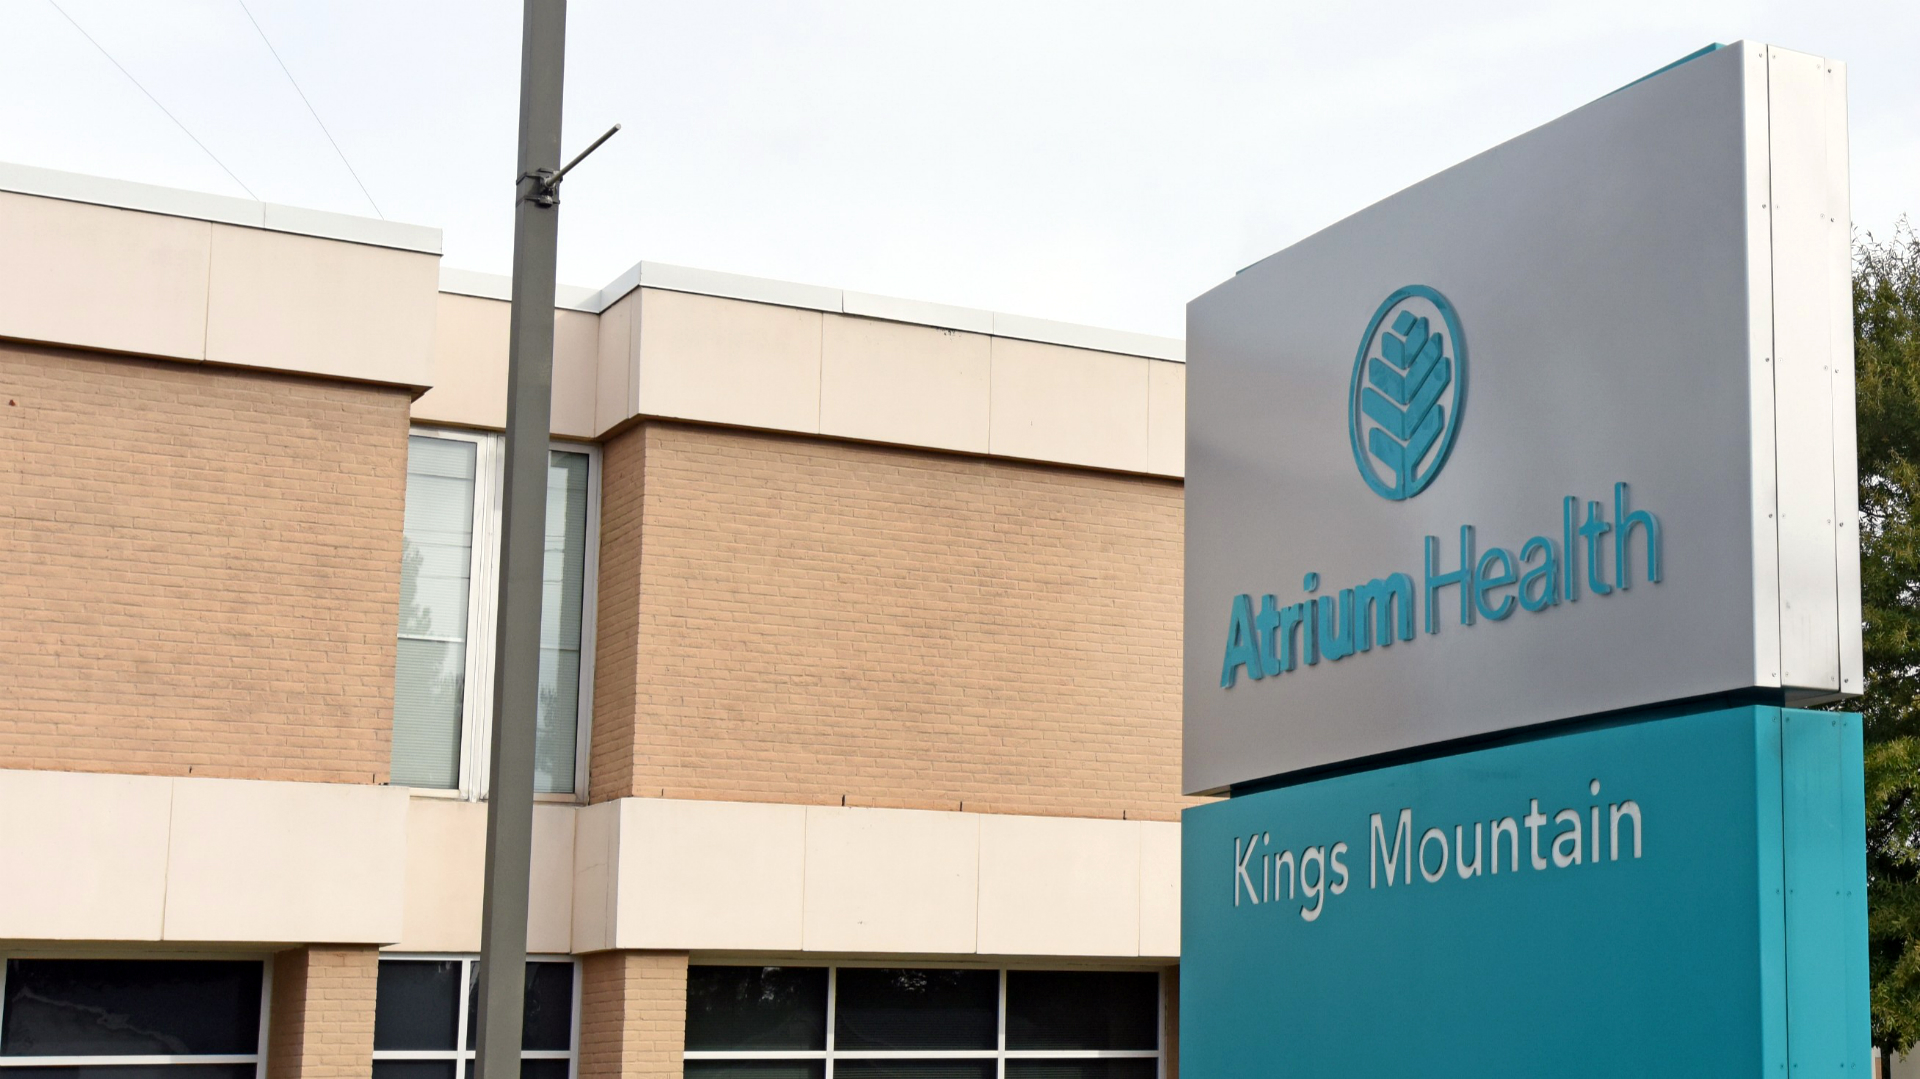 Atrium Health Kings Mountain became the hospital's official name on Nov. 1, 2018. 